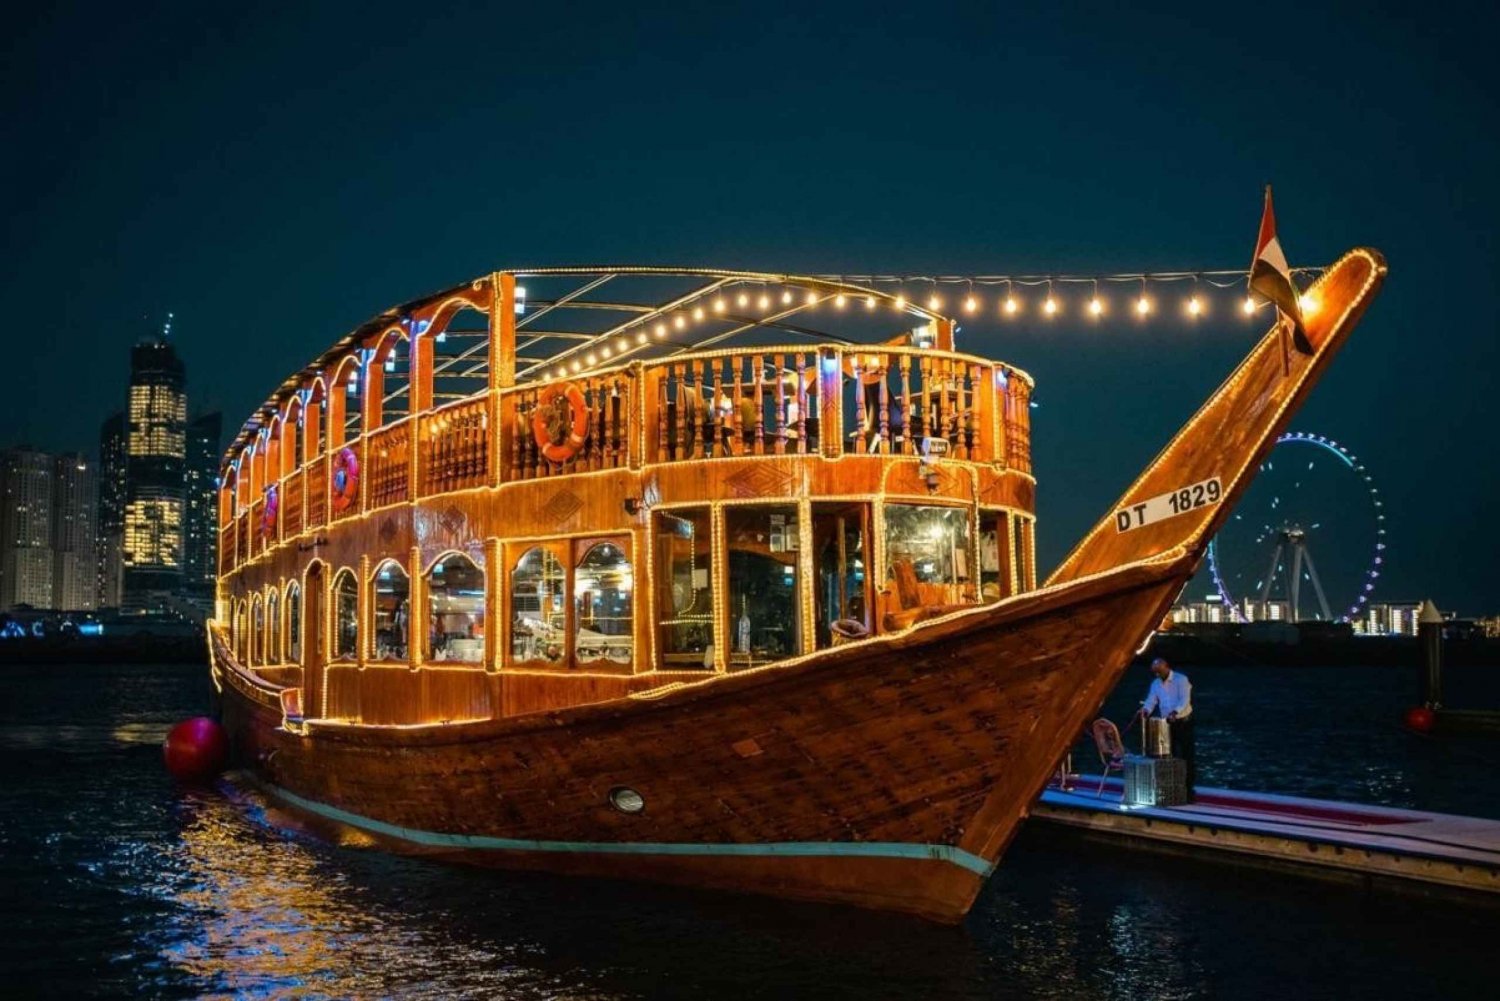 Dubai: Scenic Dhow Cruise met buffetdiner en live shows